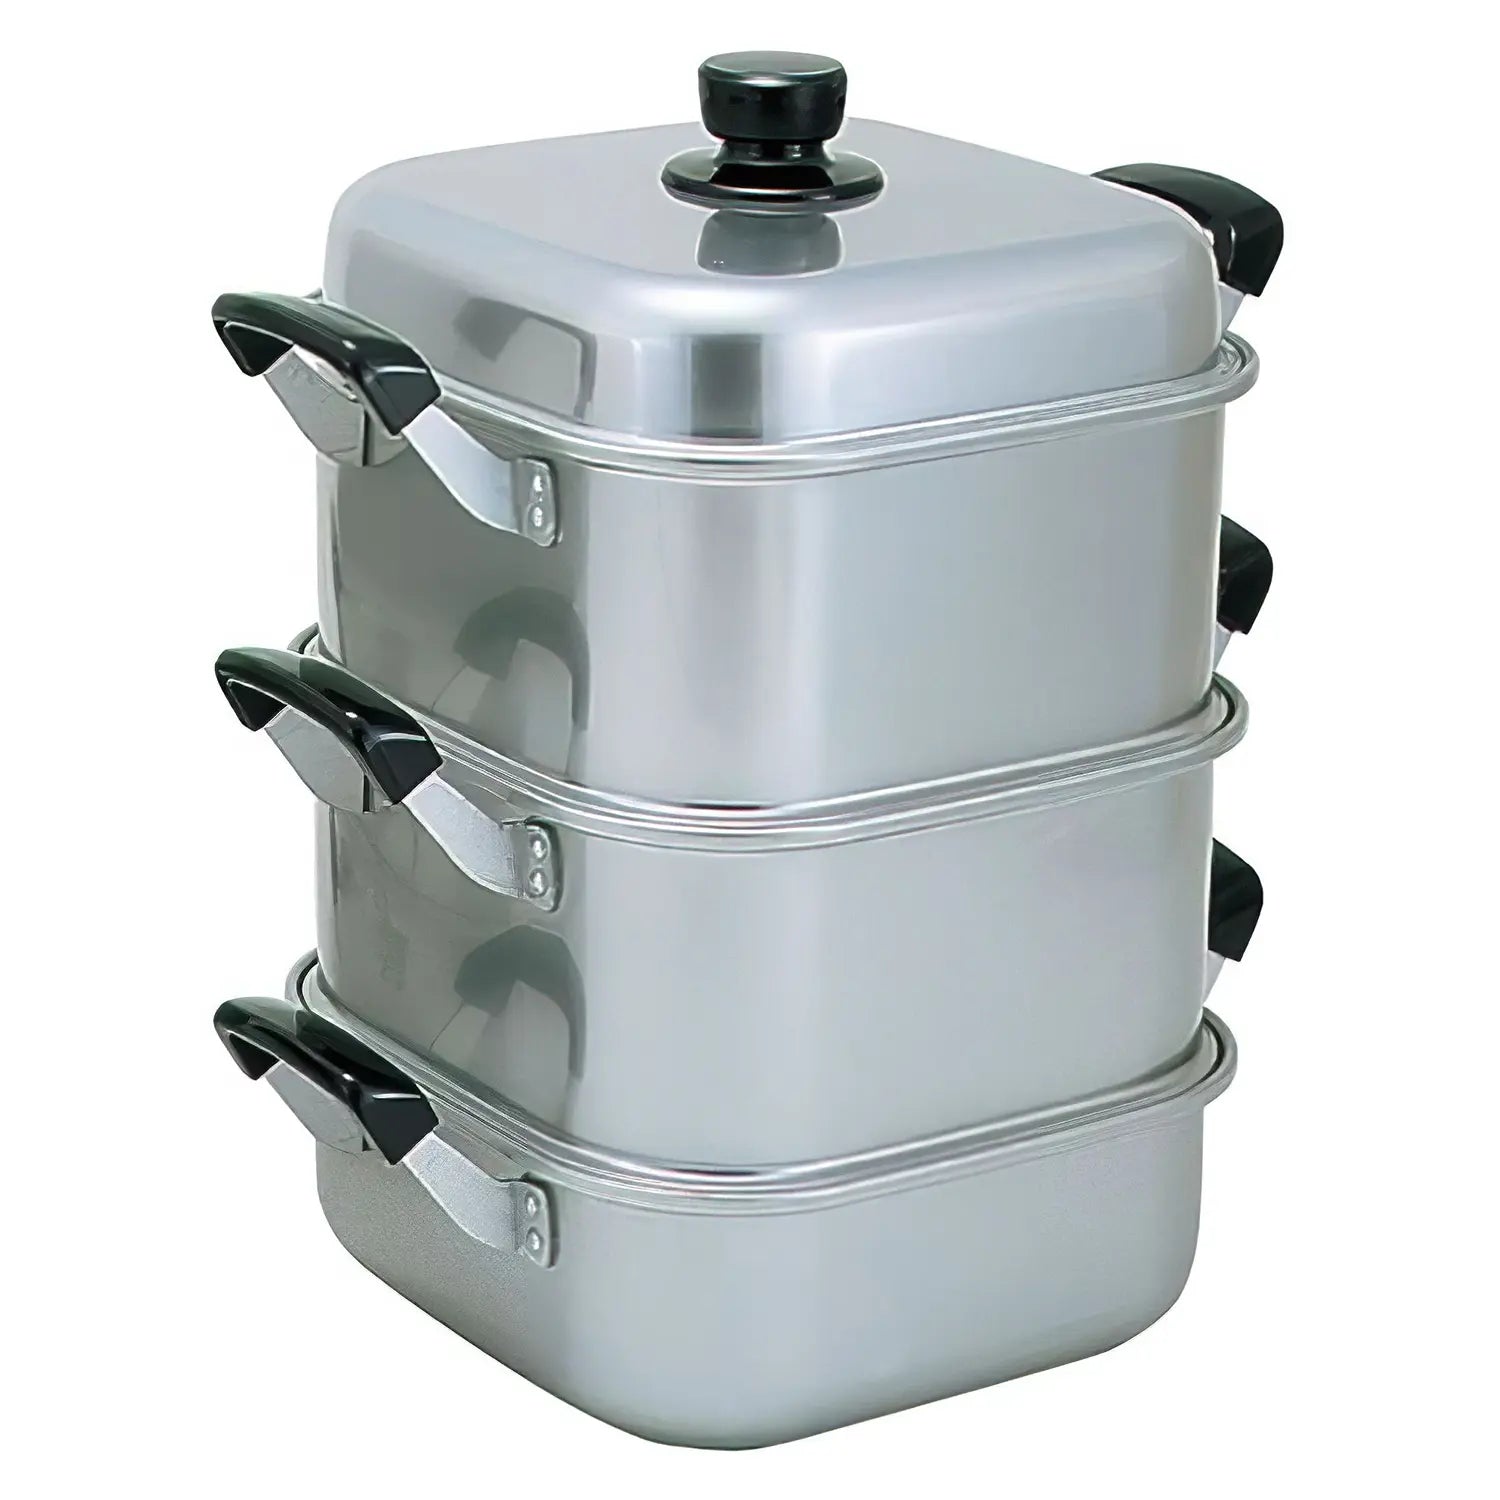 Akao Aluminium 26cm 3-Tier Square Steamer - Efficient and Versatile Cooking Solution